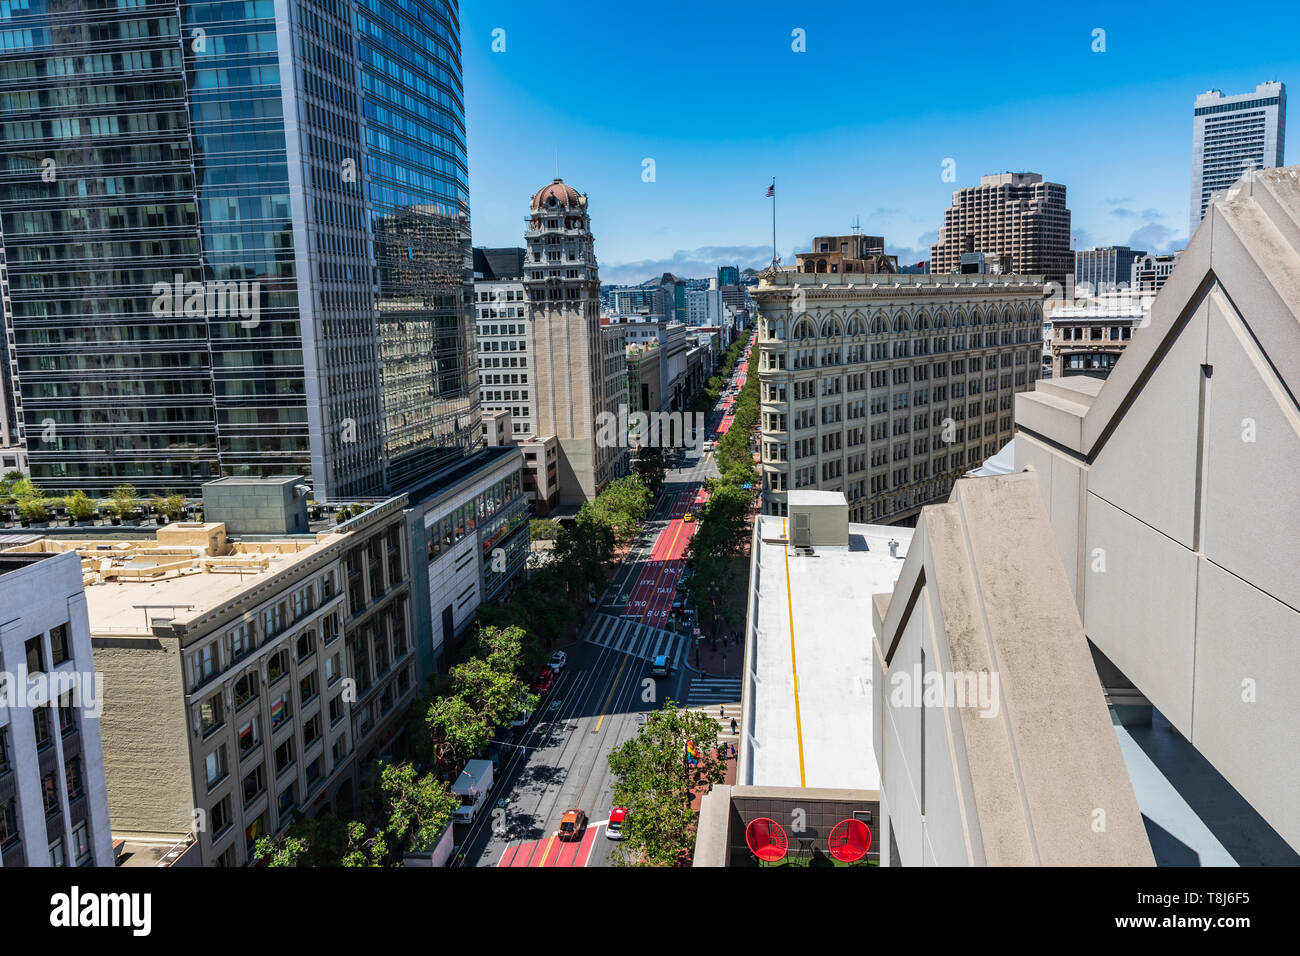 San Francisco,California,USA - June 23, 2017 : Market street view from above Stock Photo